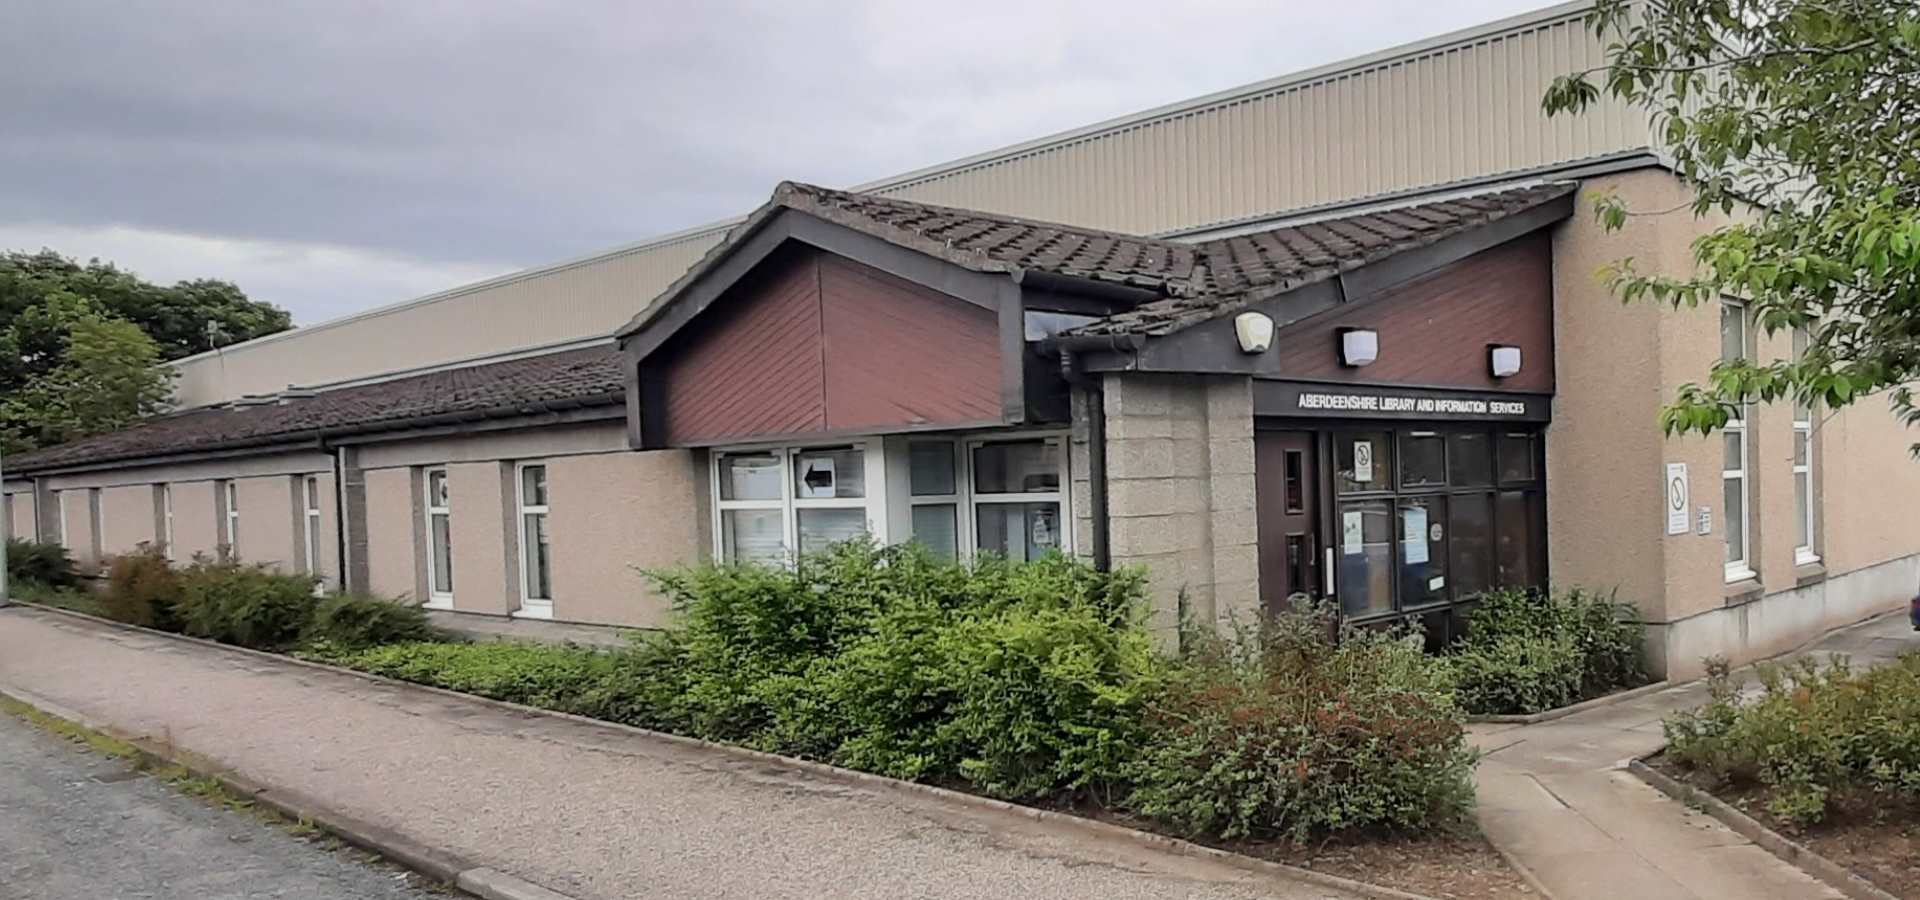 Aberdeenshire Libraries Headquarters exterior